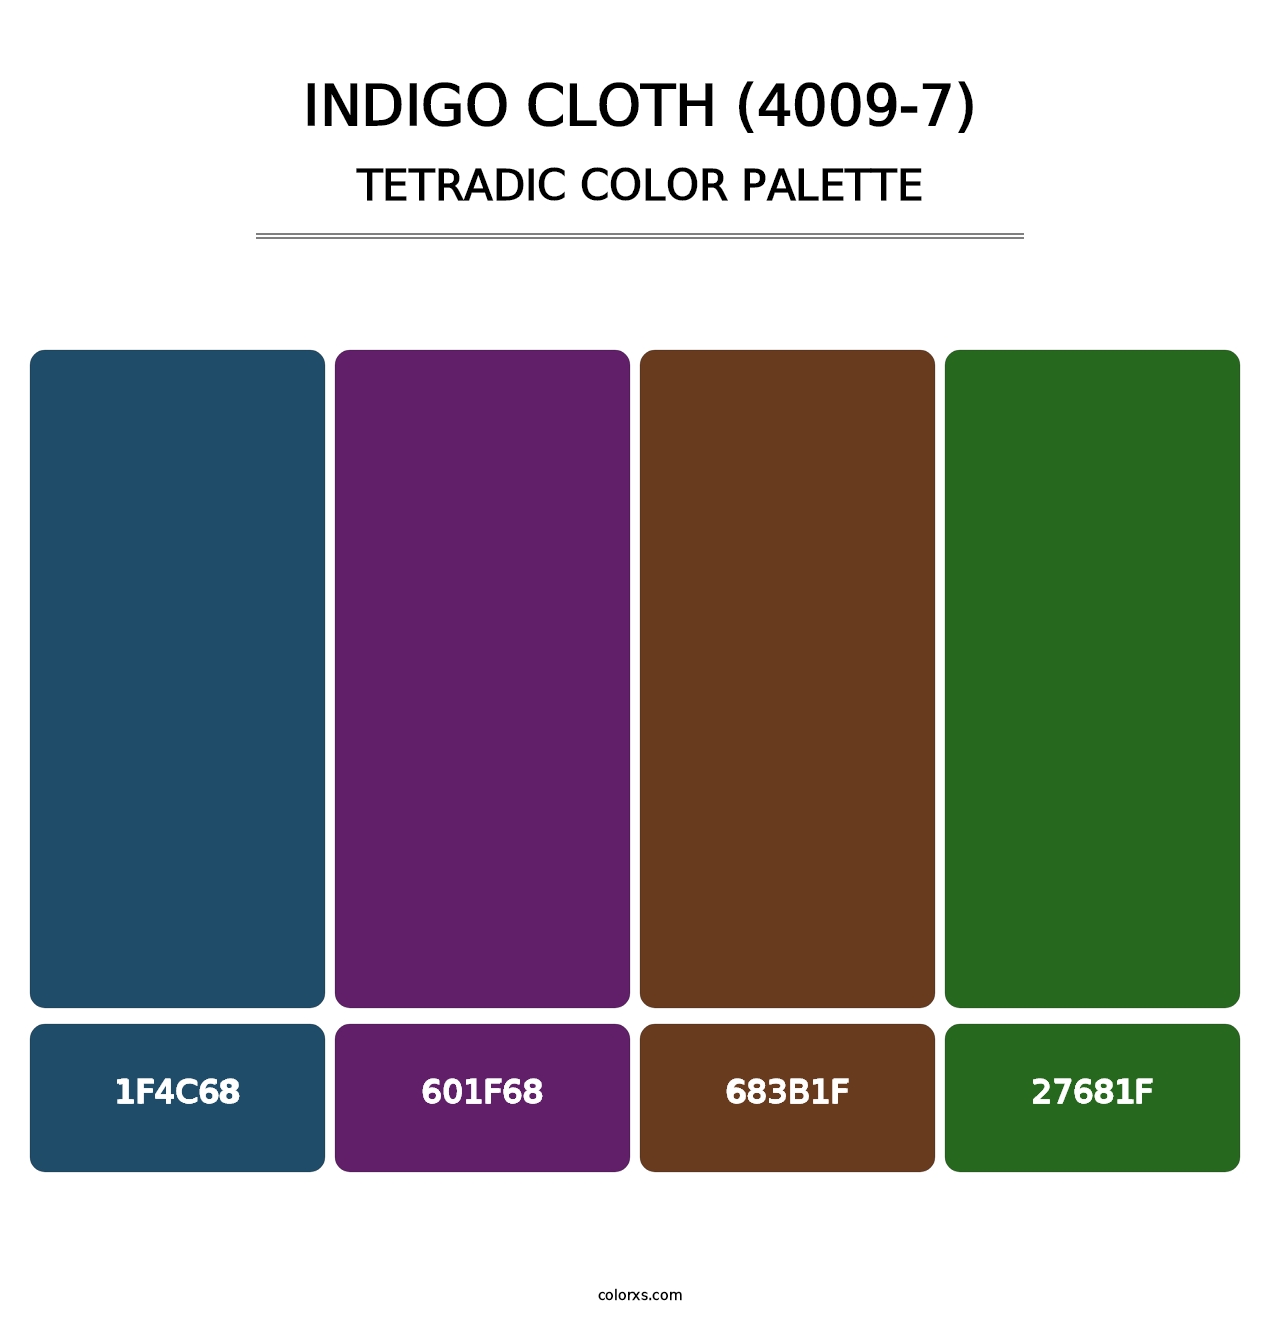 Indigo Cloth (4009-7) - Tetradic Color Palette